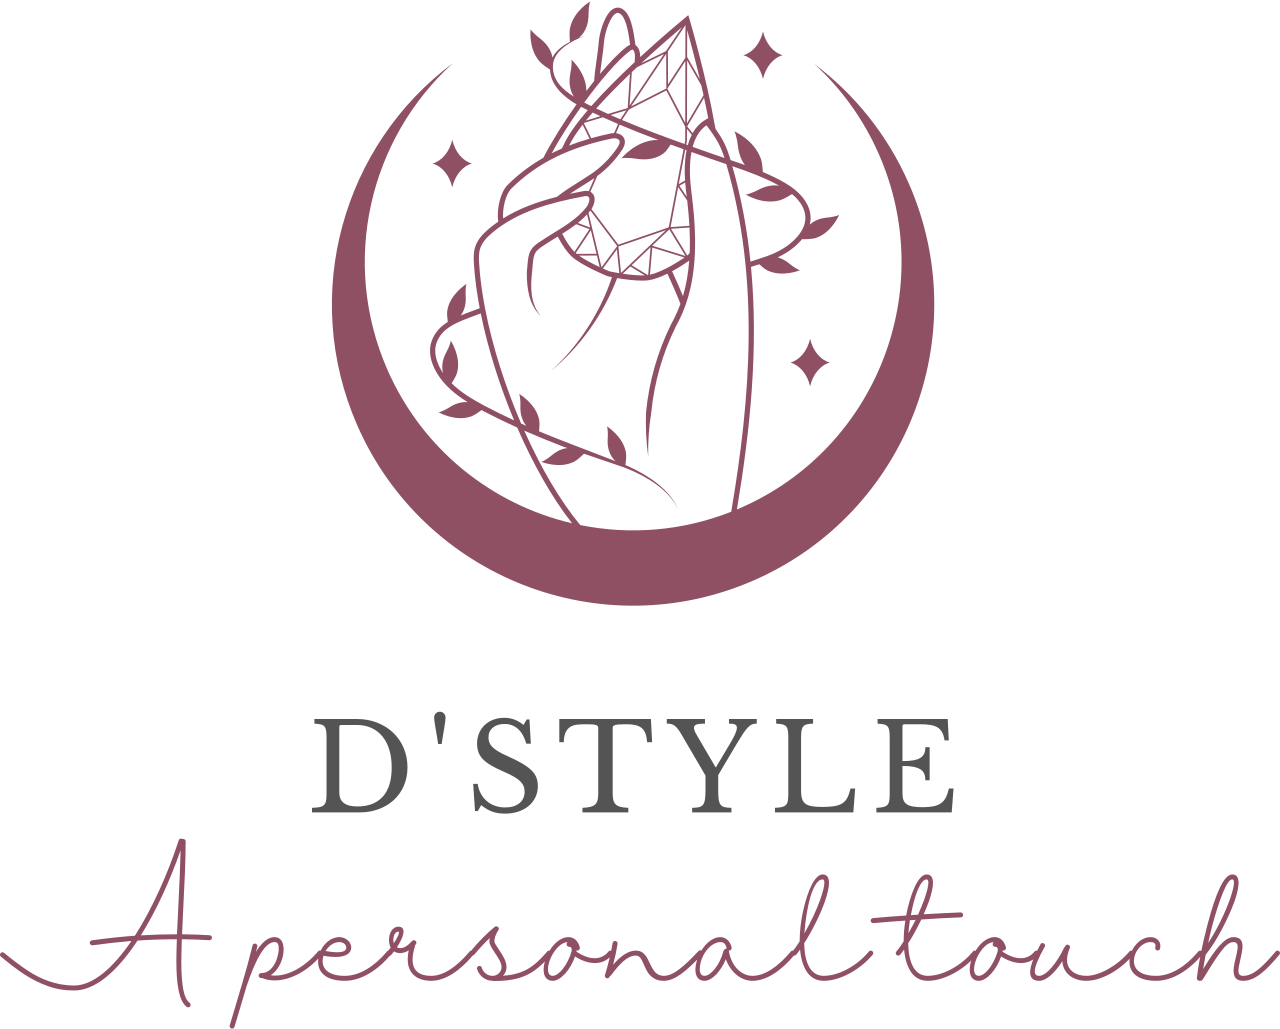 D'Style's logo